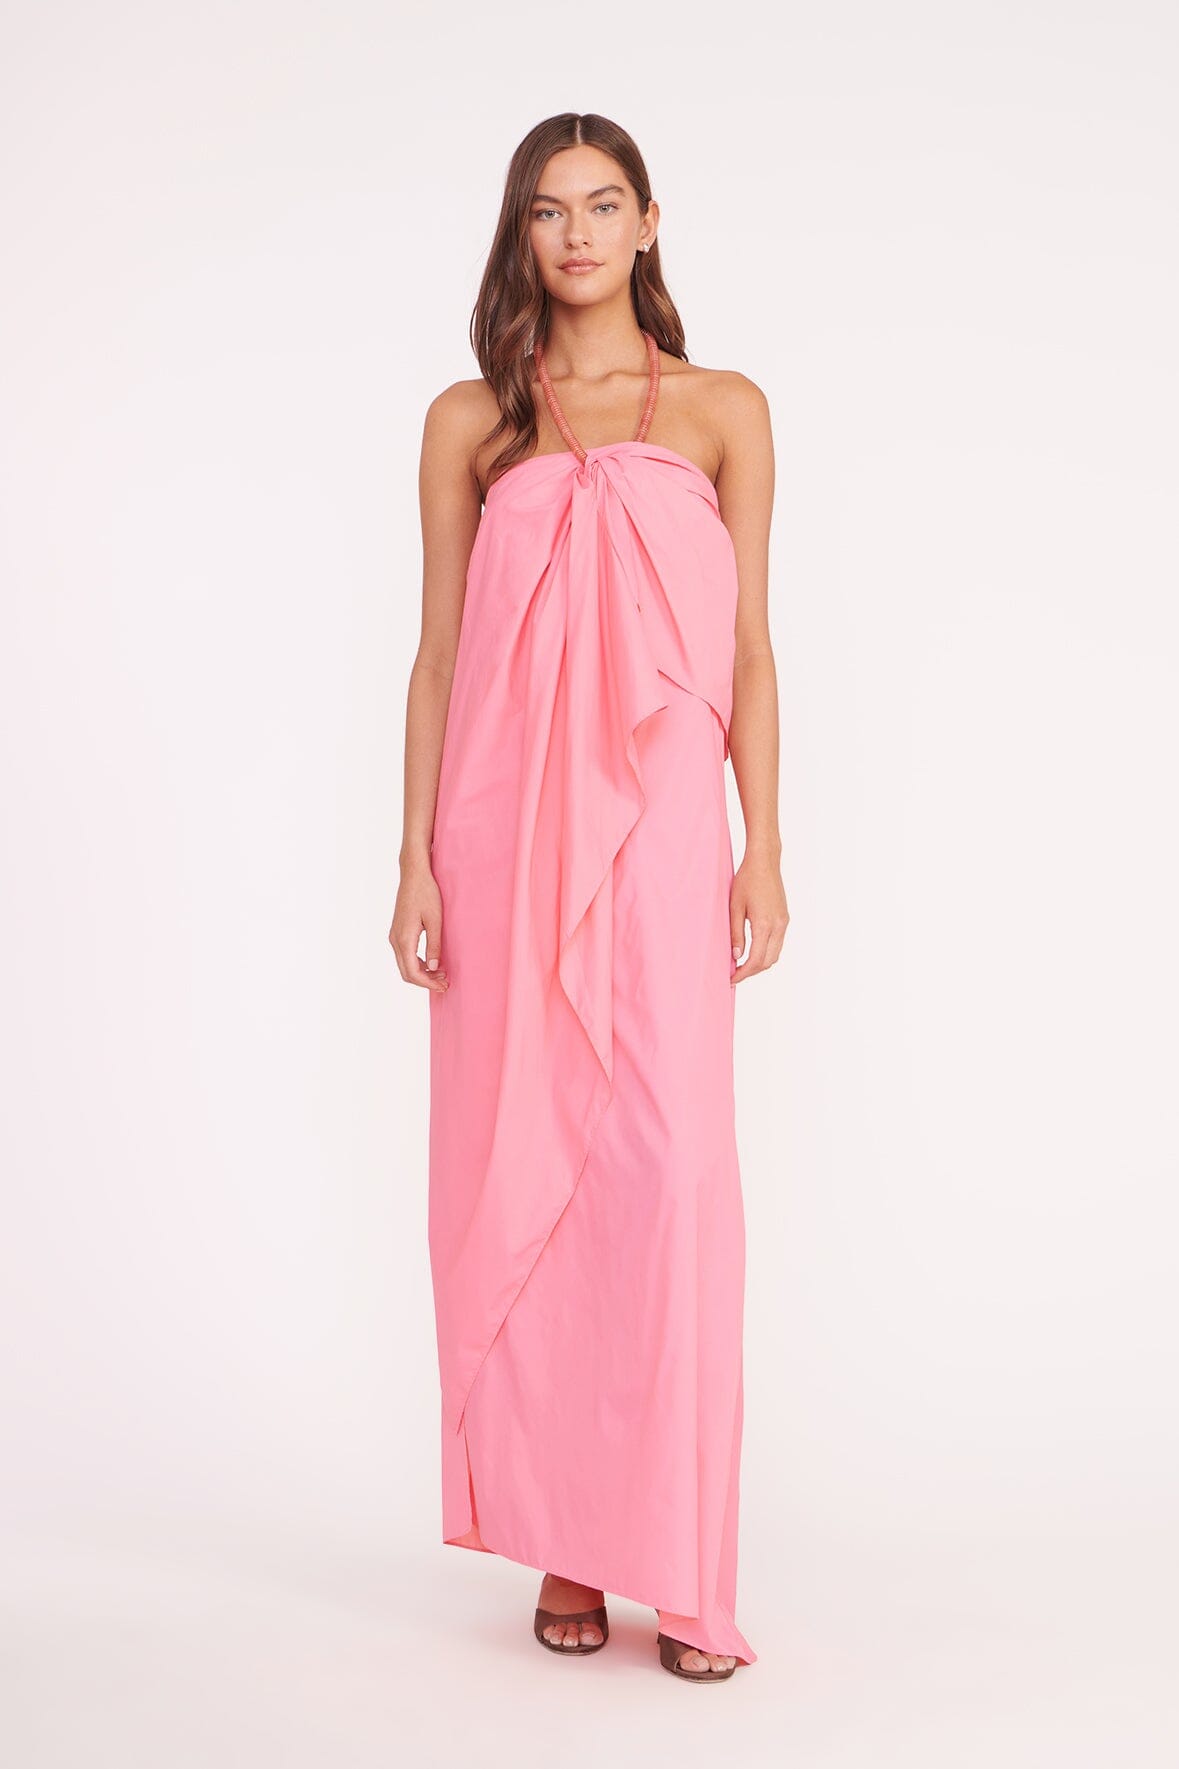 coral pink dress